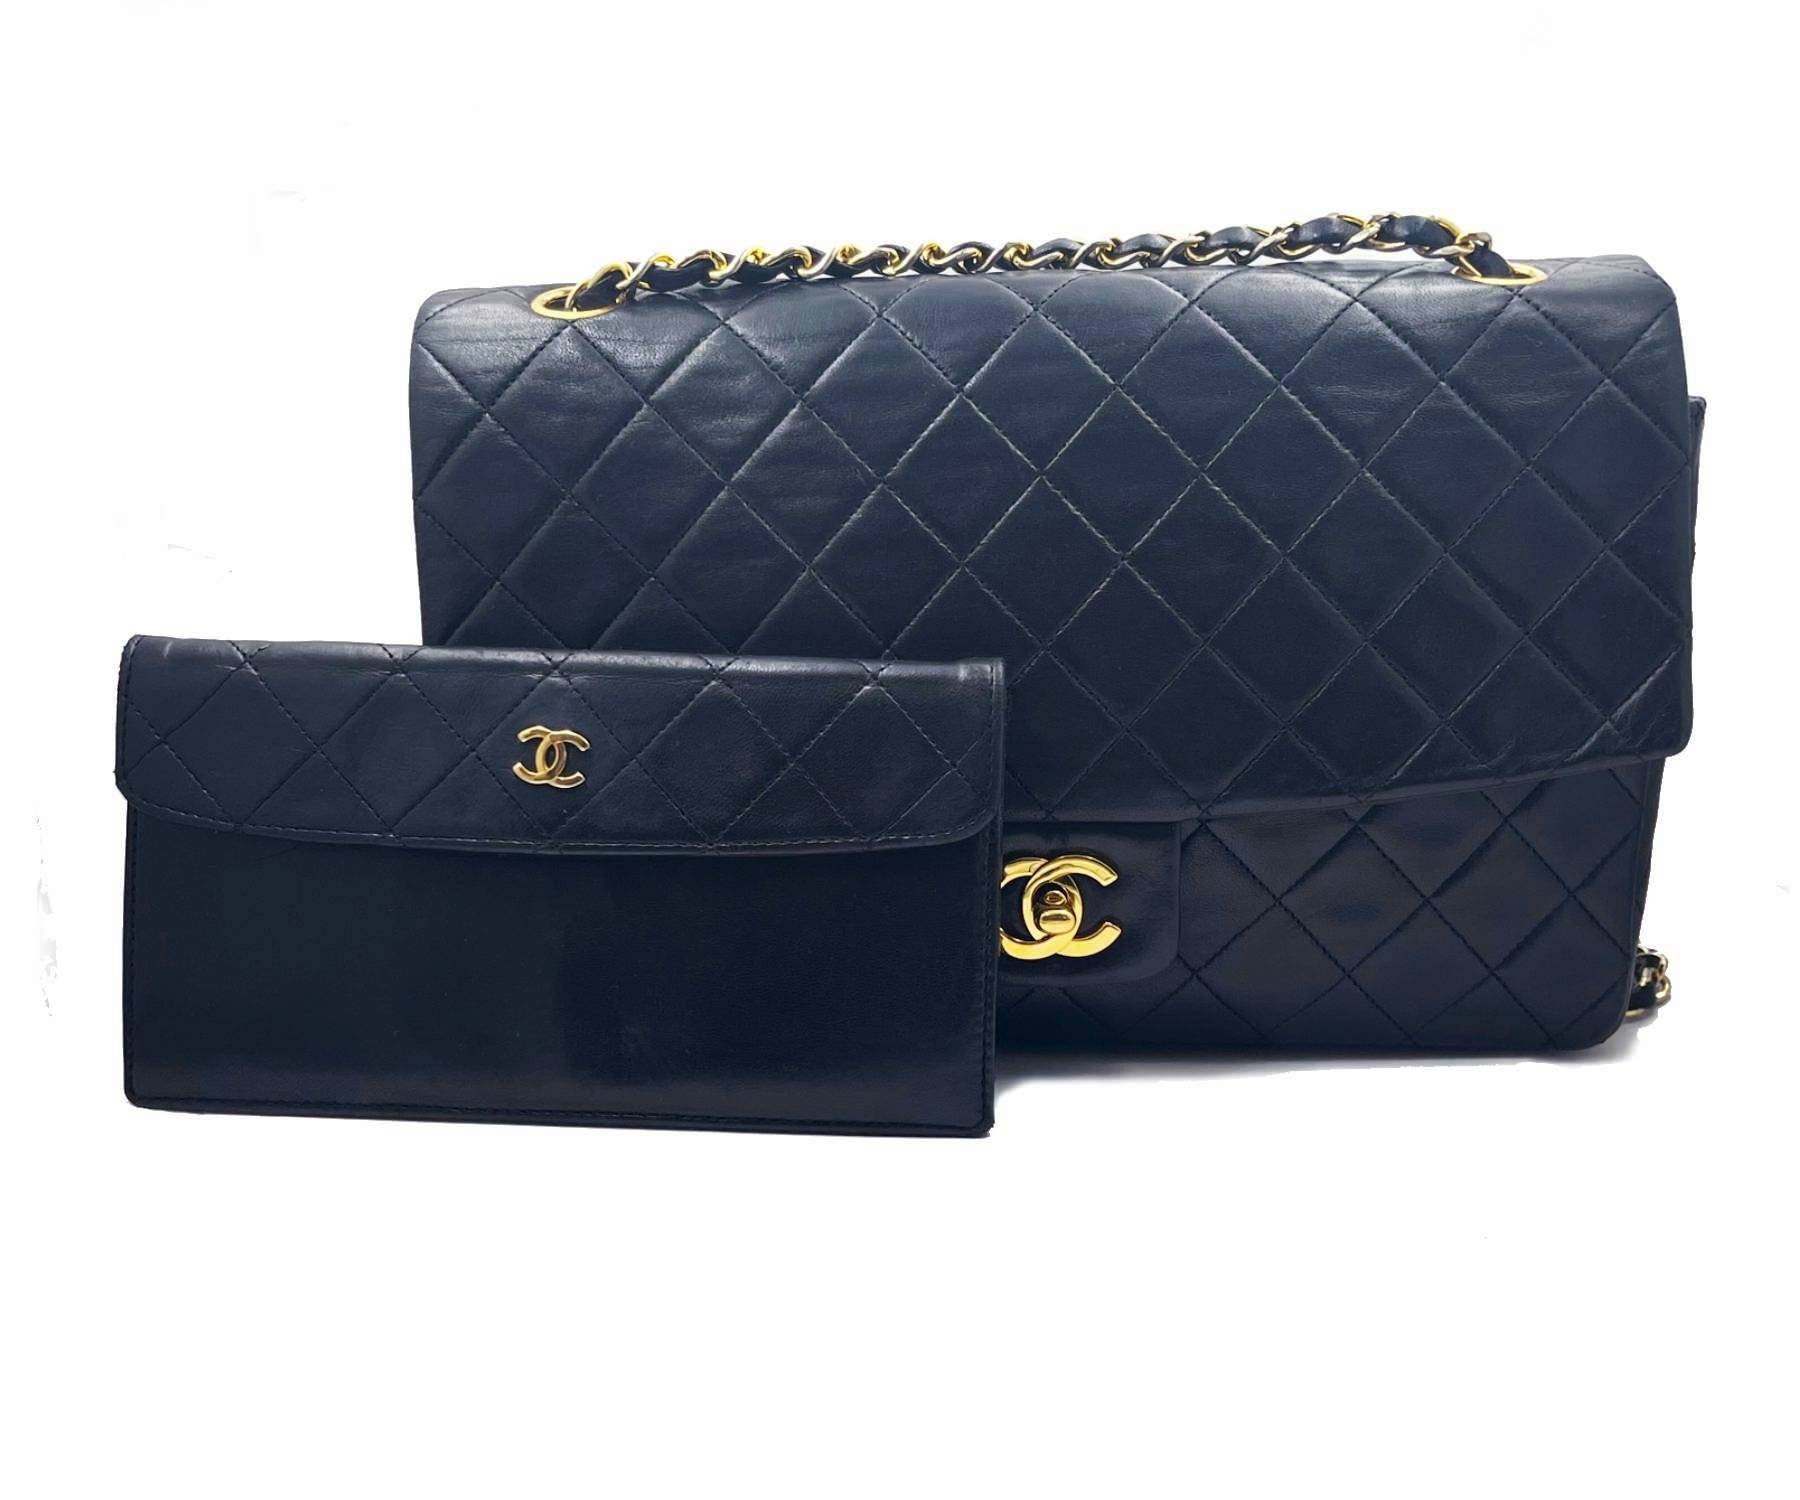 NWT Chanel Black Caviar Classic Slim Card Holder Case Wallet